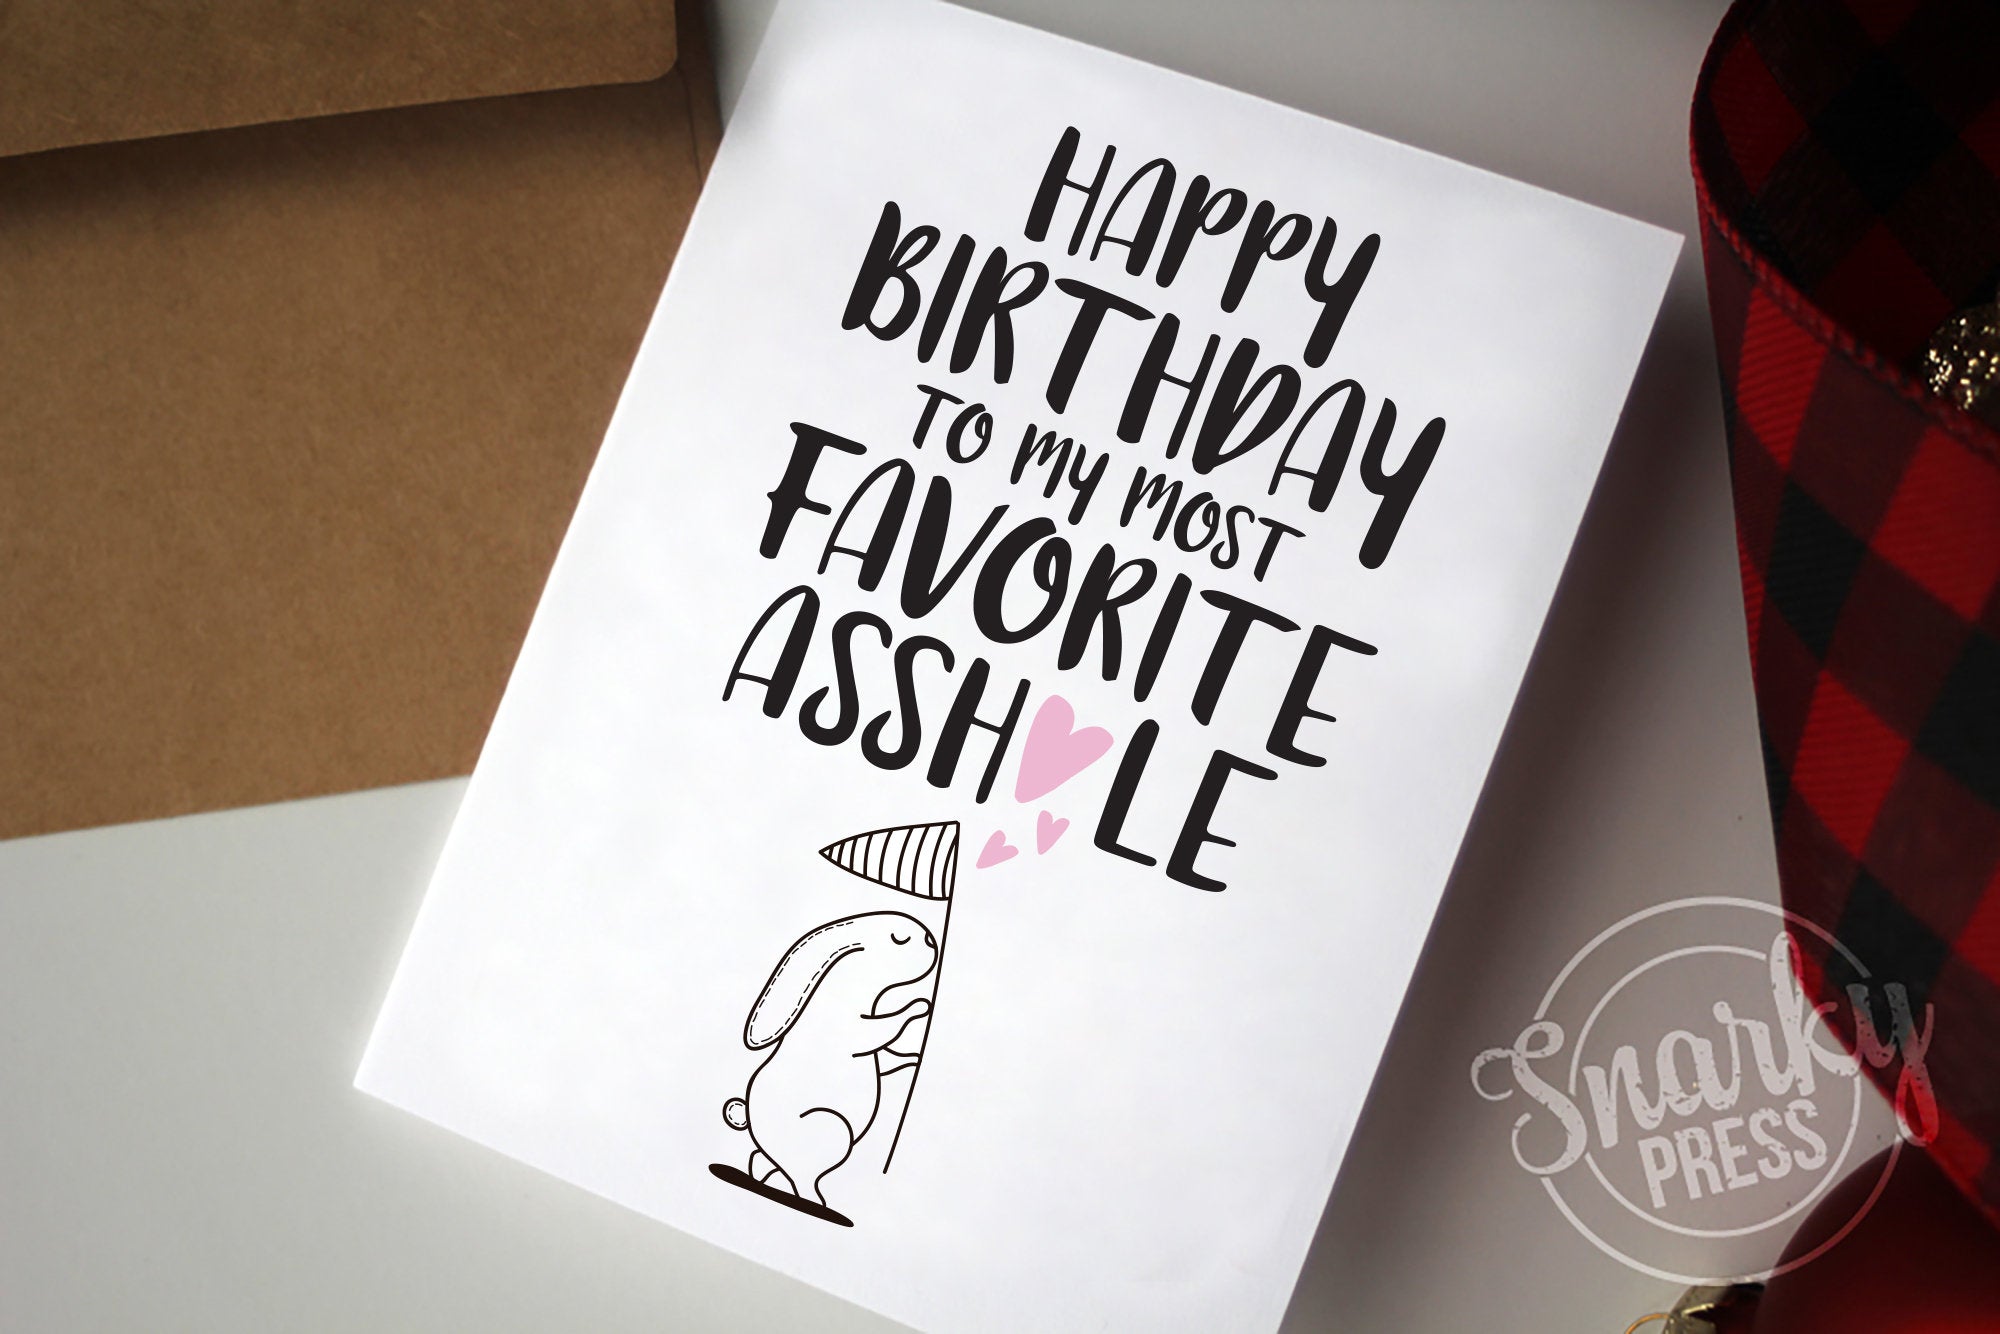 My favorite asshole Birthday Card